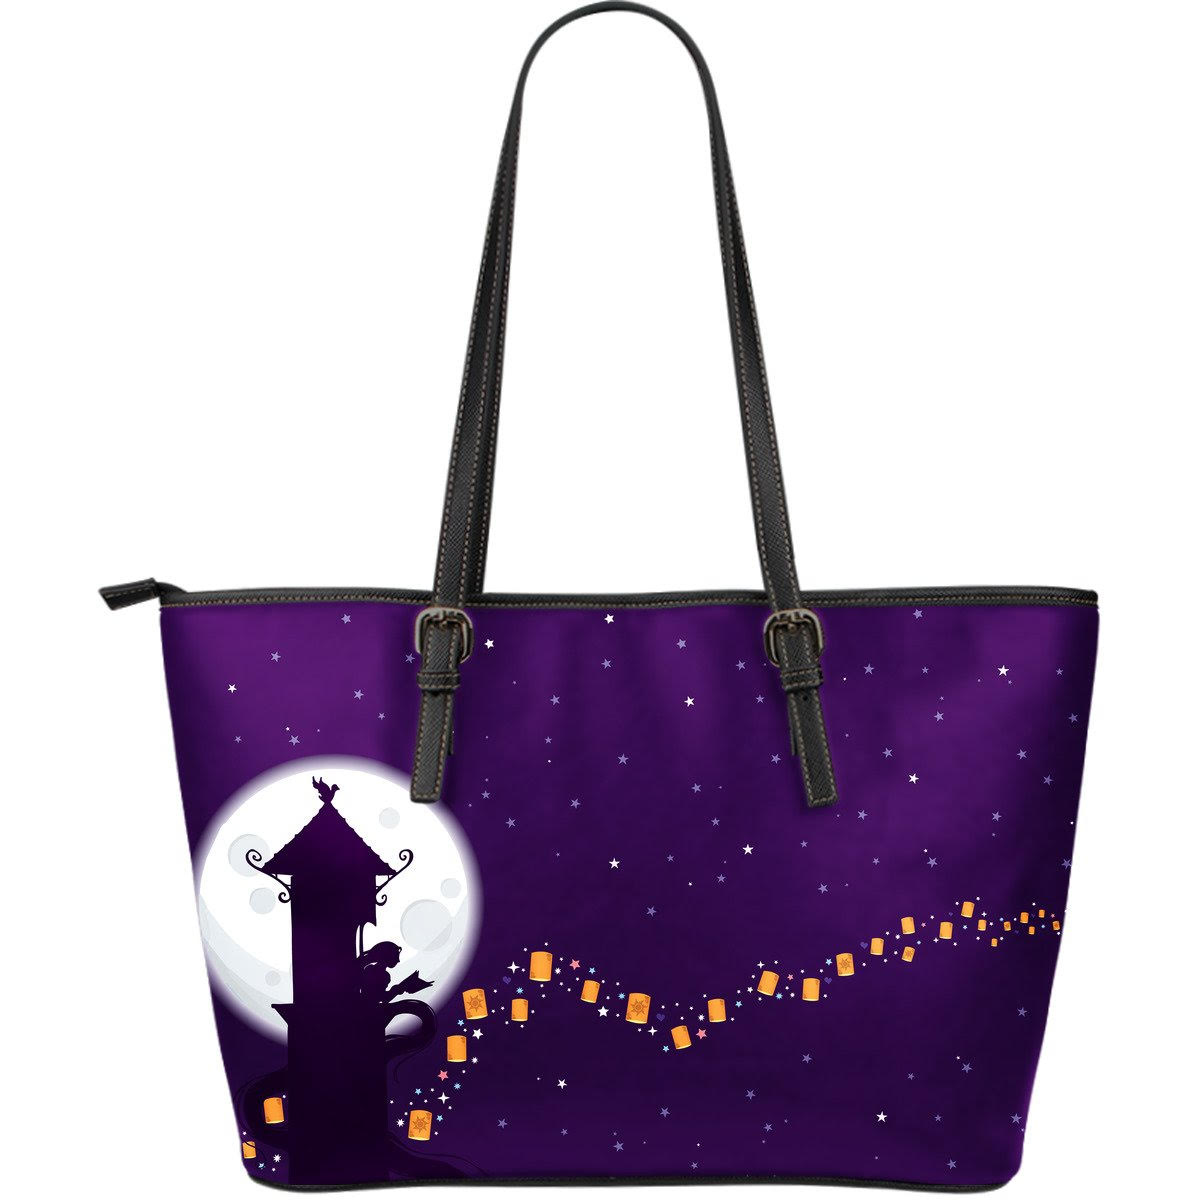 Rapunzel handbags